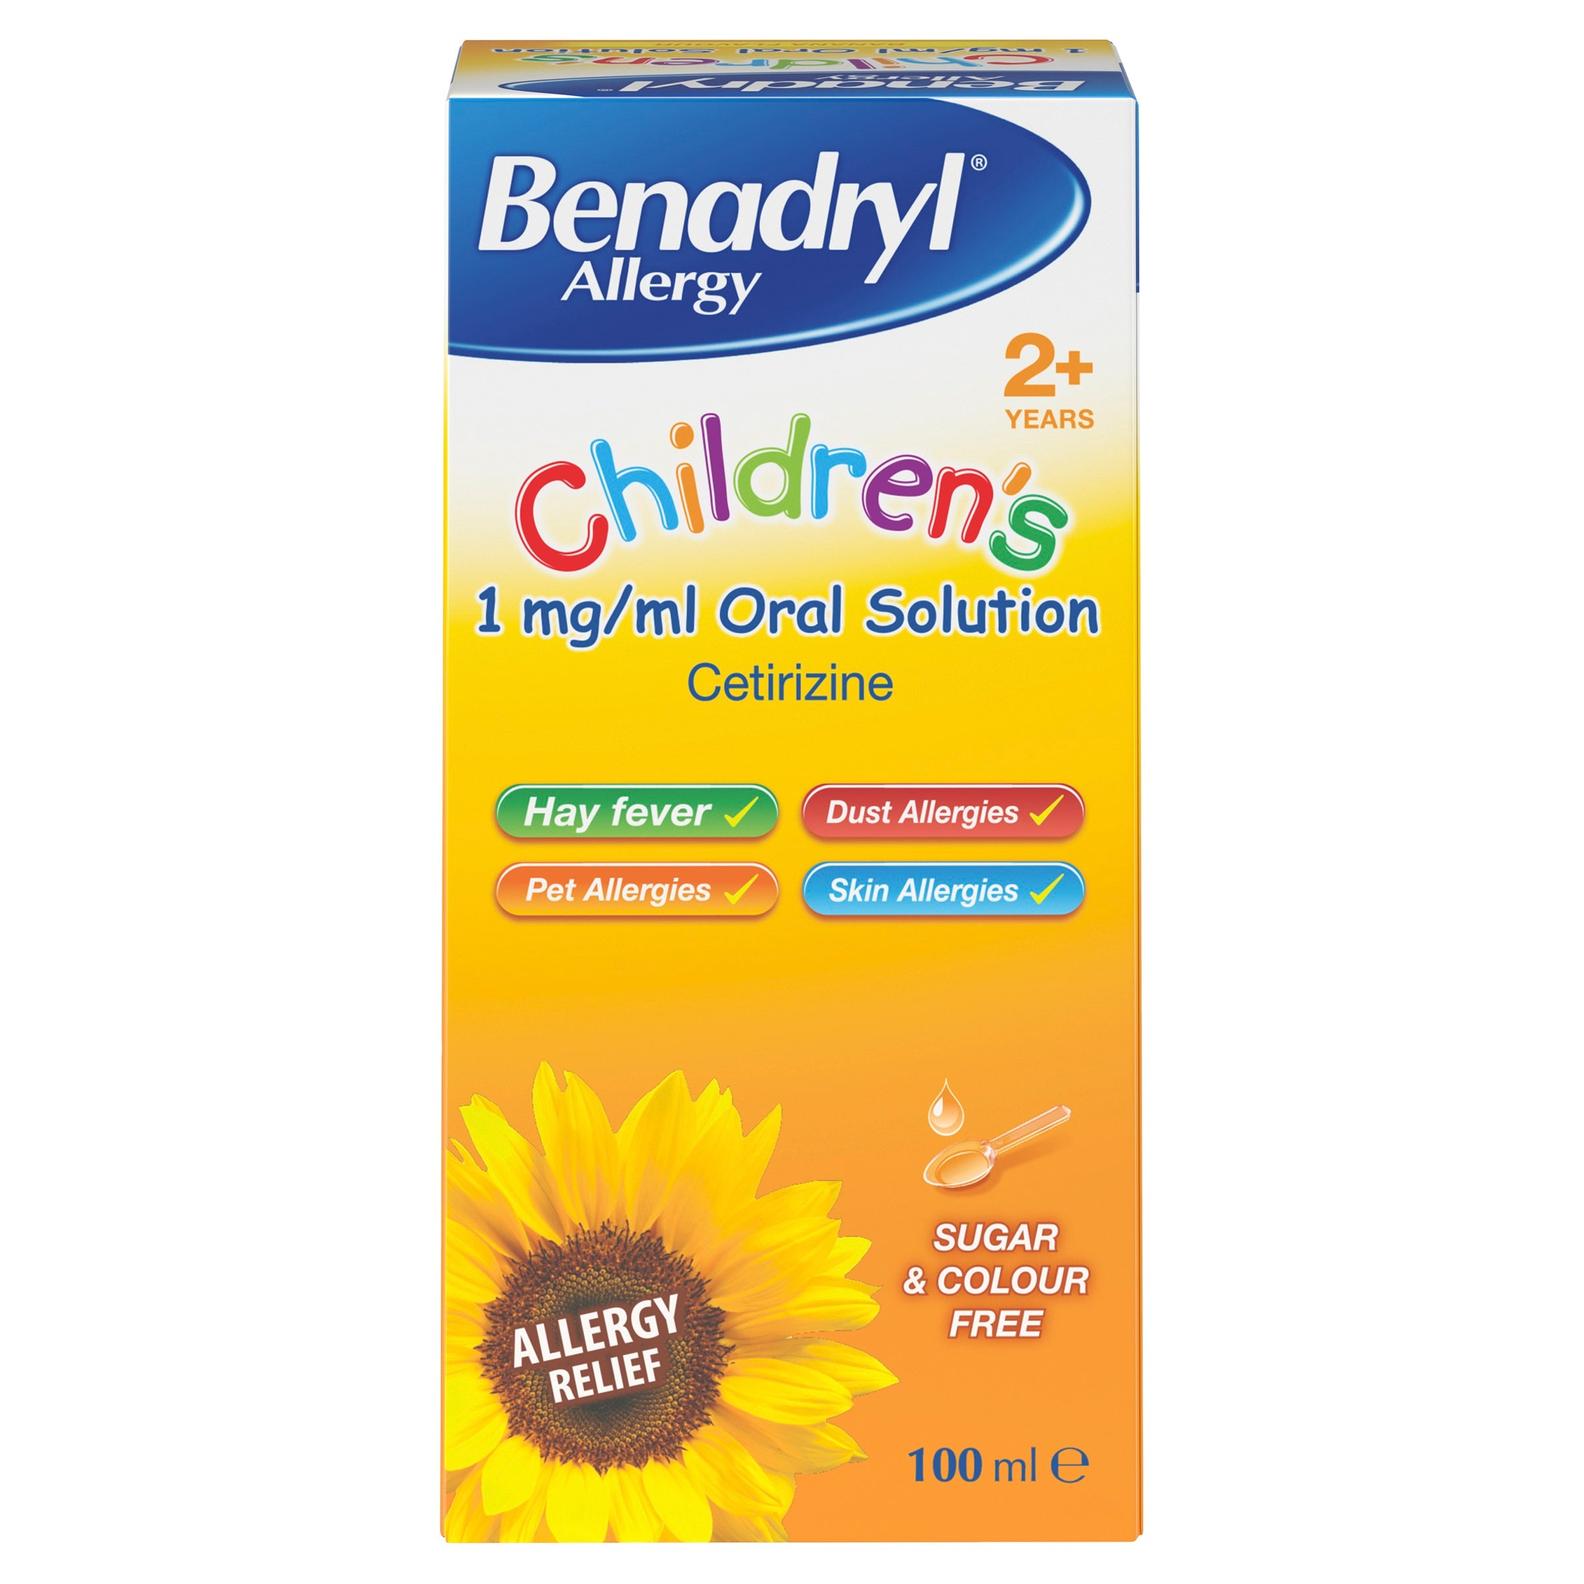 BENADRYL allergy children's 2+ 1mg/ml oral solution offers at £649 in Lloyds Pharmacy